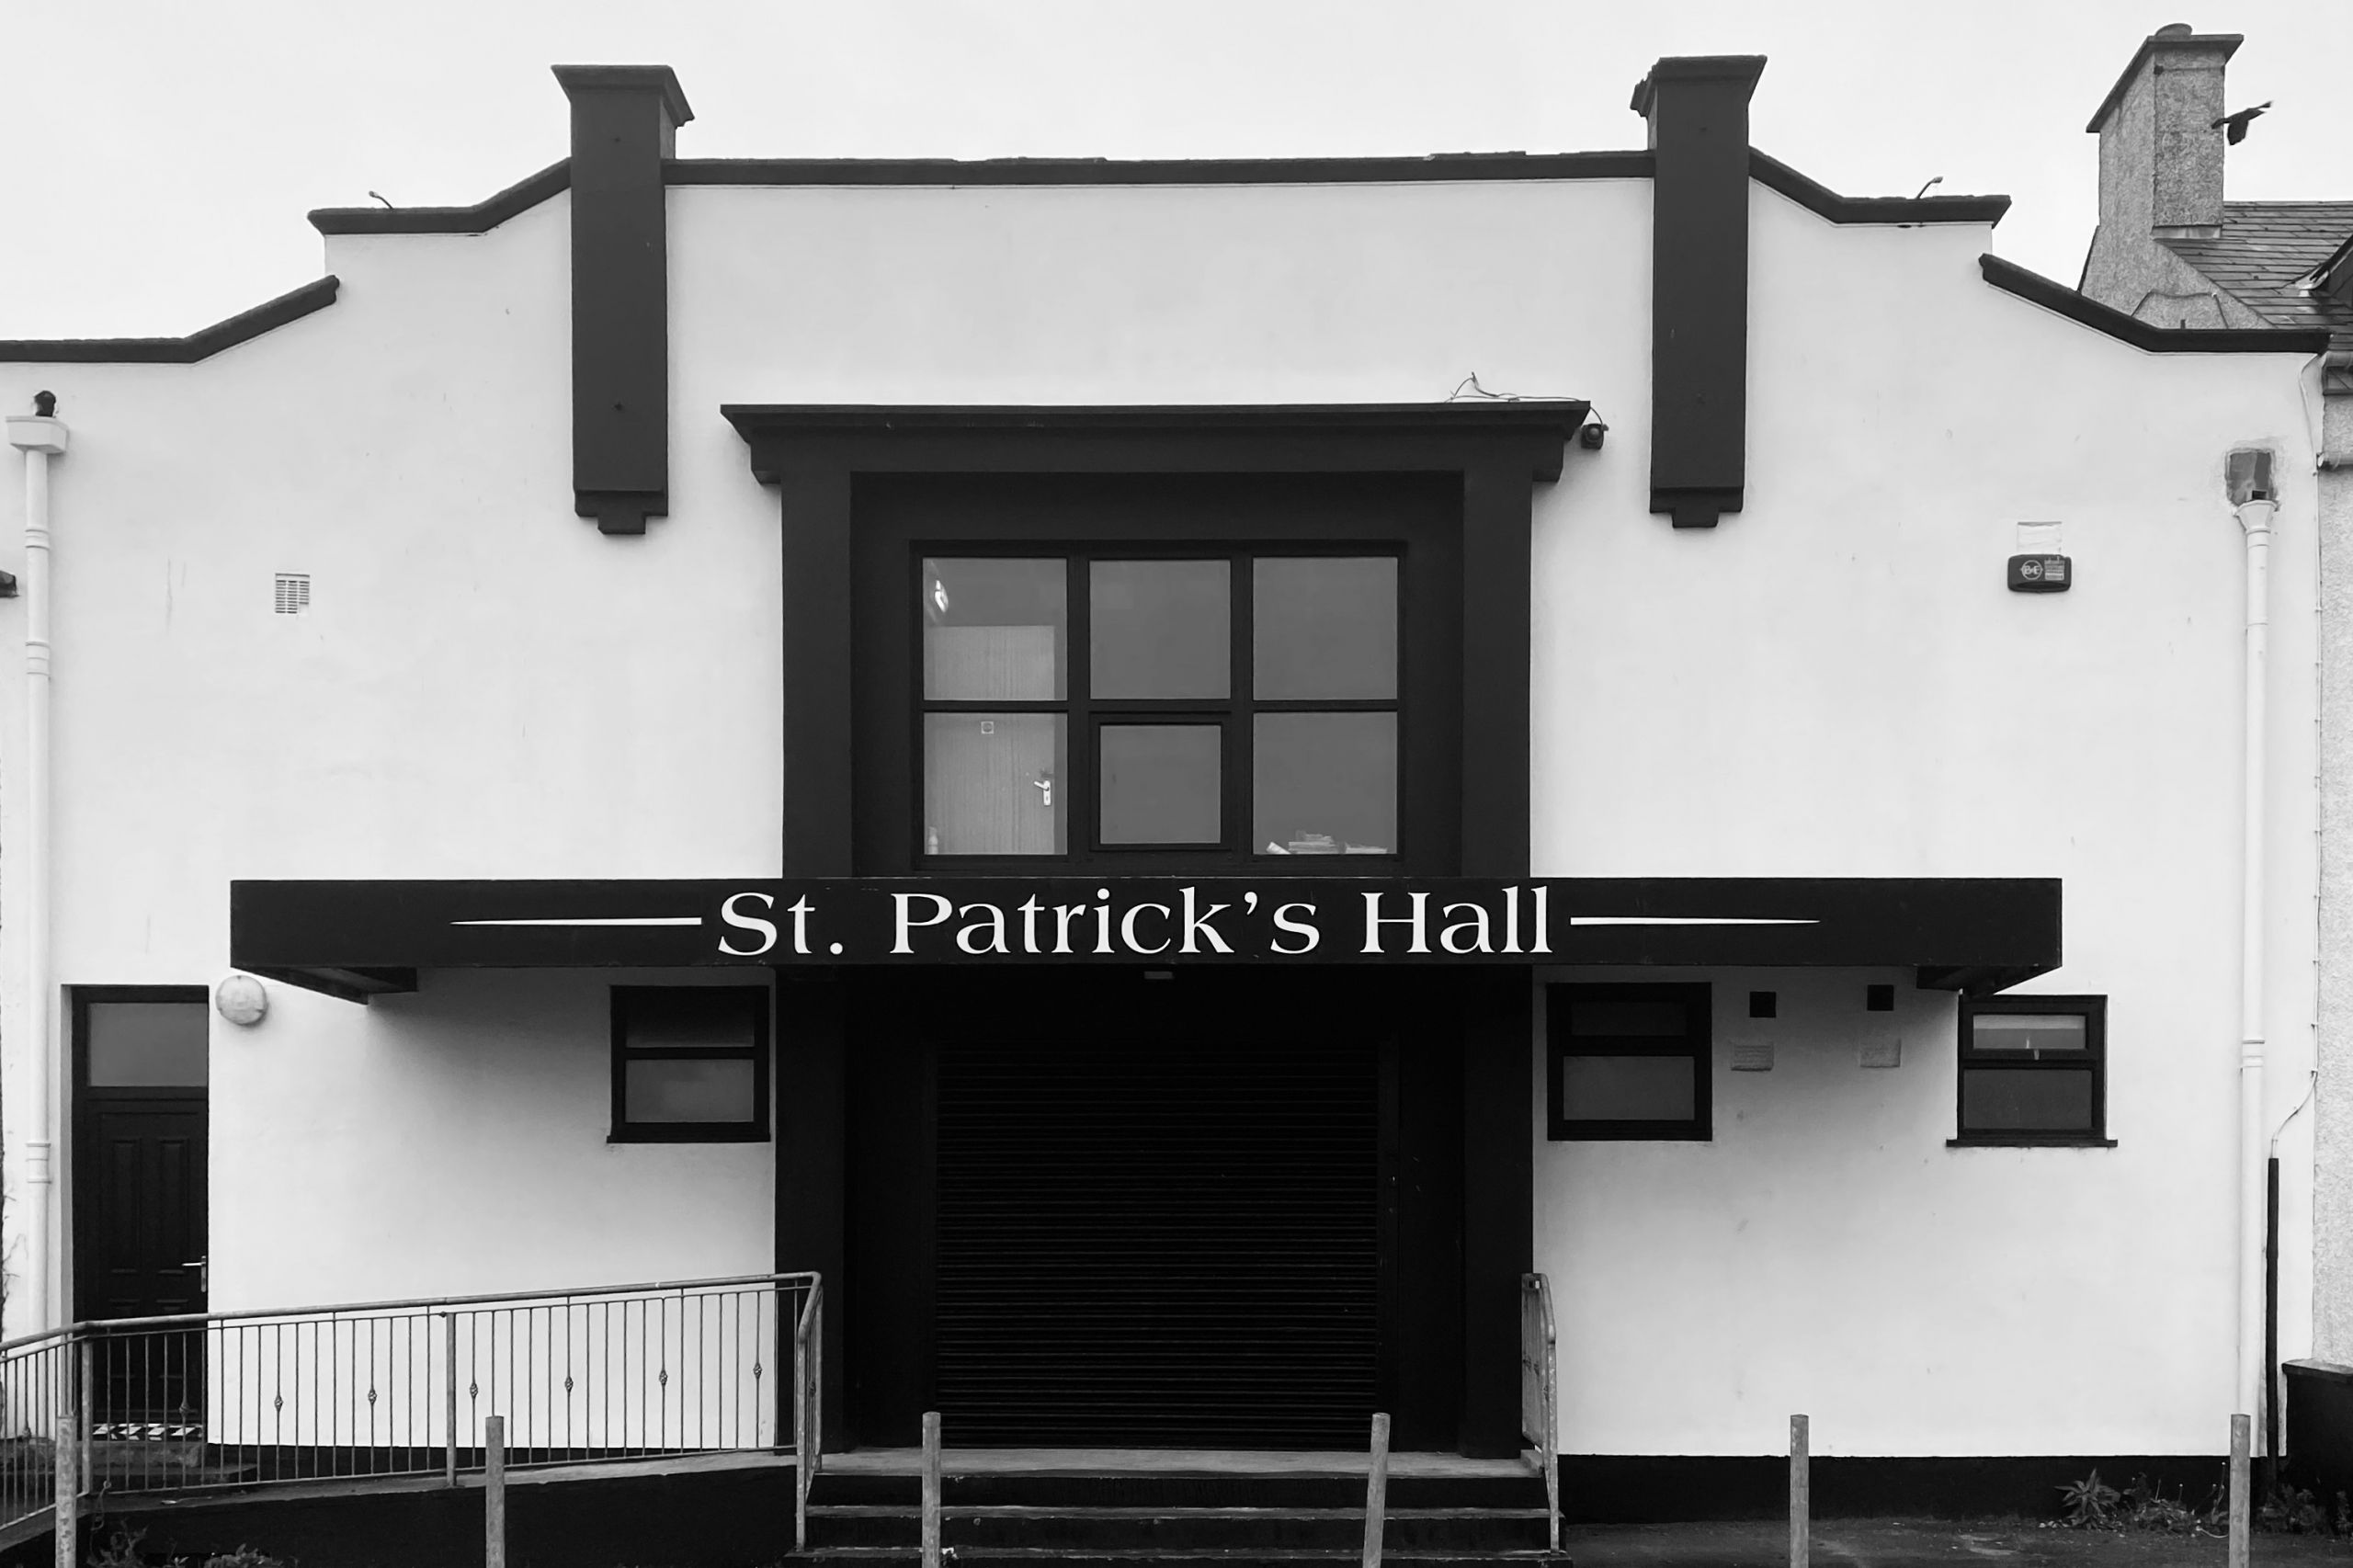 St Patrick's Hall - previously the Palladium Ballroom